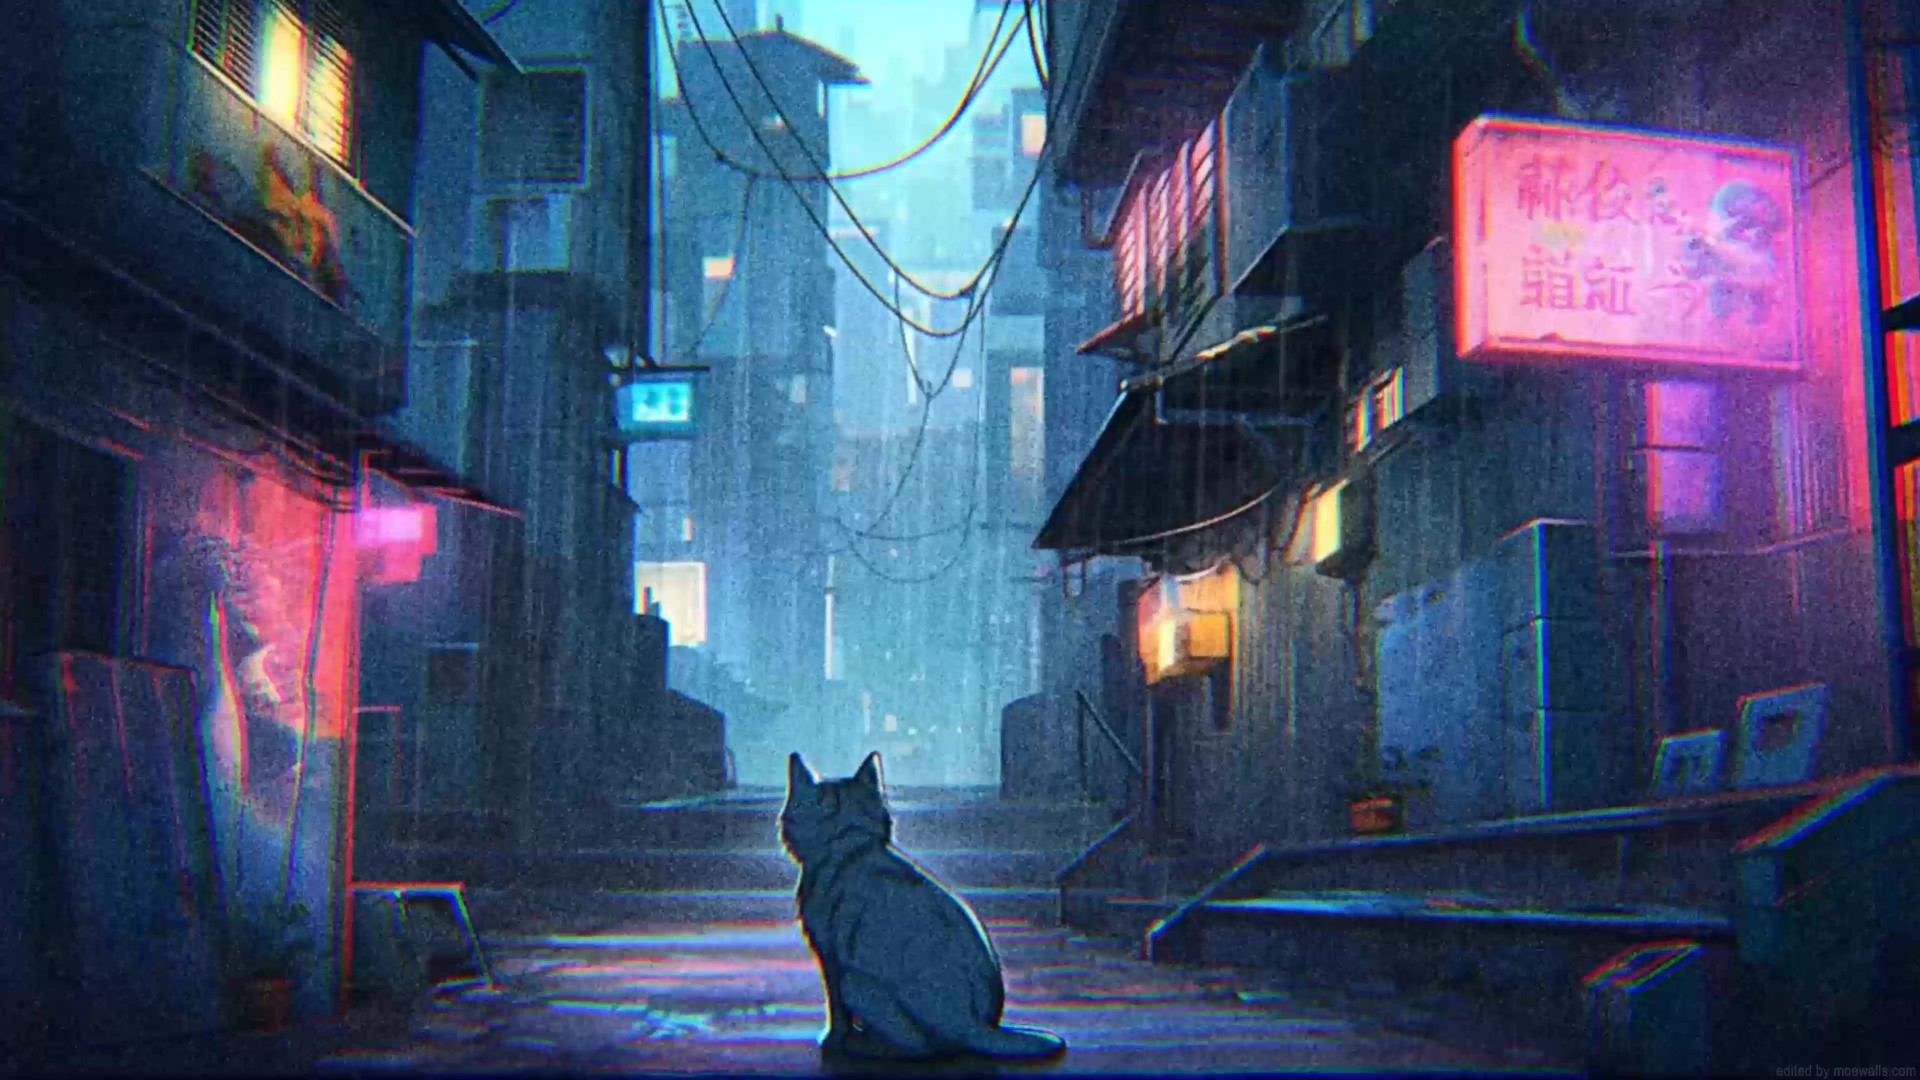 Lonely Cat Street Alley Rainy Night Live Wallpaper - MoeWalls